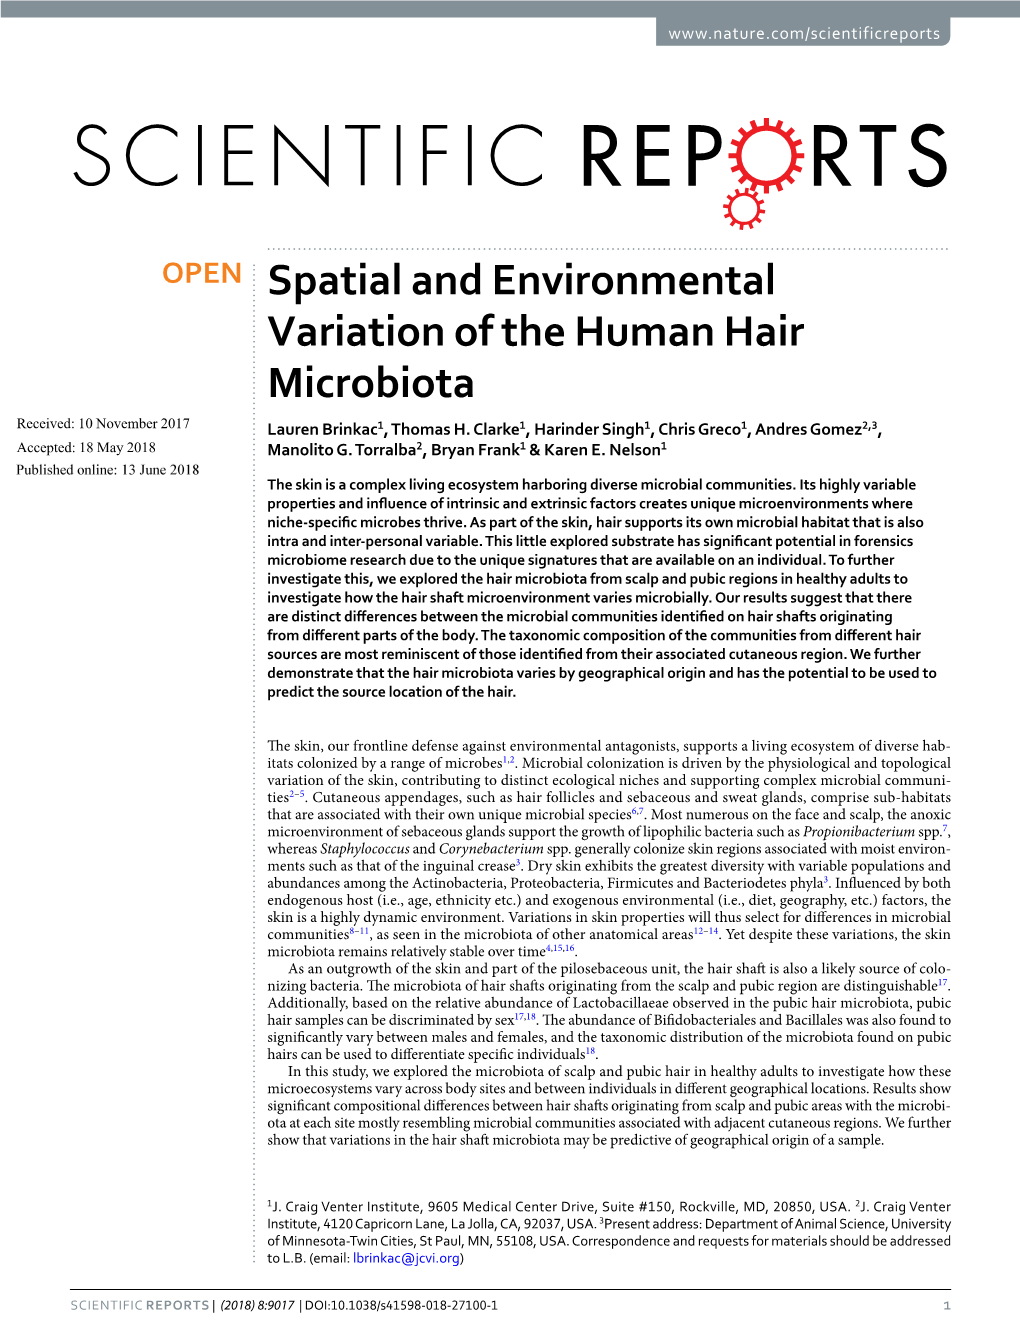 Spatial and Environmental Variation of the Human Hair Microbiota Received: 10 November 2017 Lauren Brinkac1, Thomas H